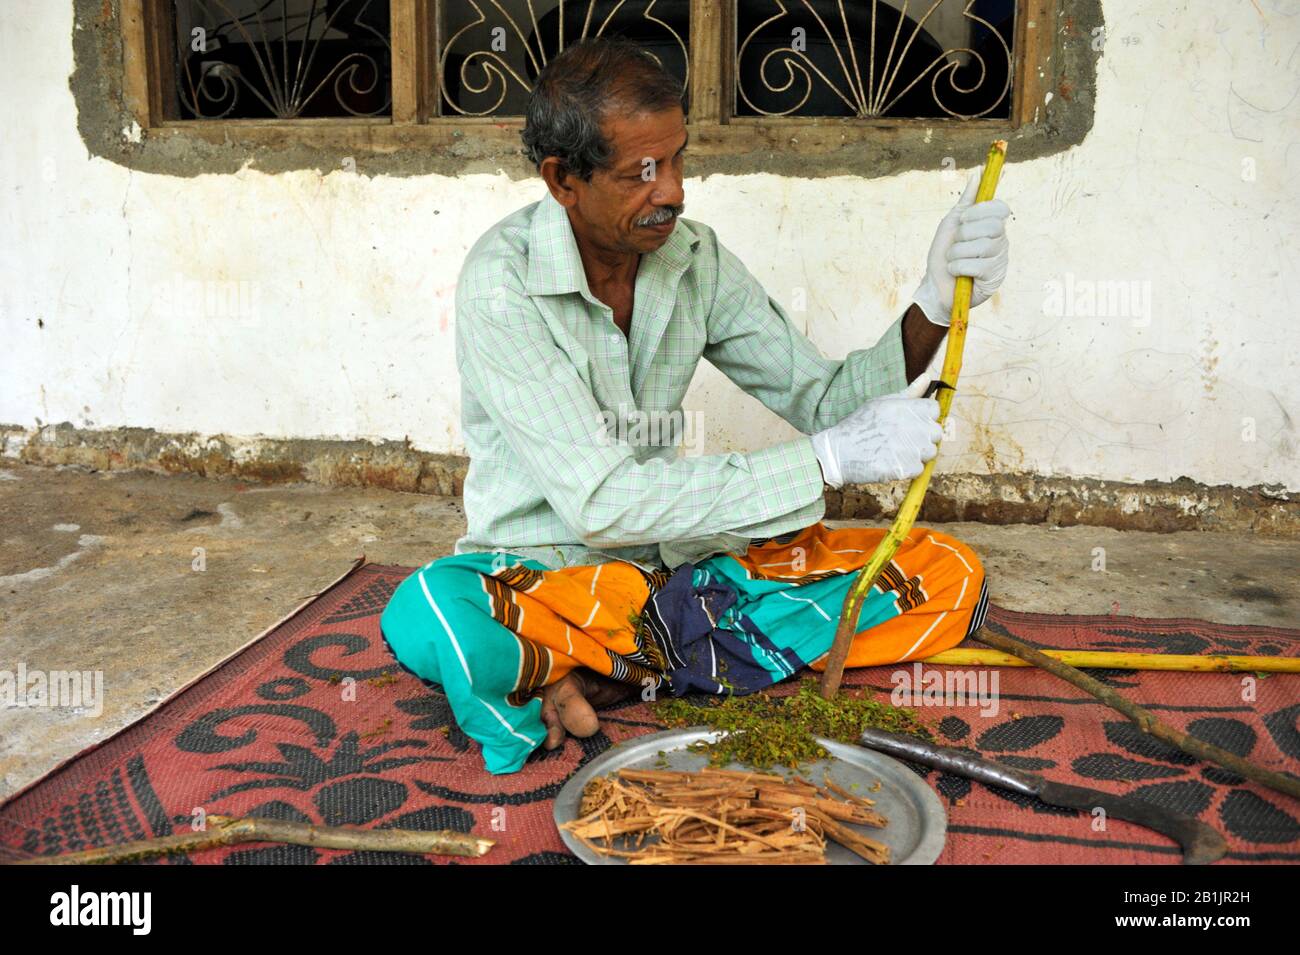 Sri Lanka, Uva province, Dombagahawela, Madara, farmer peeling cinnamon branch Stock Photo